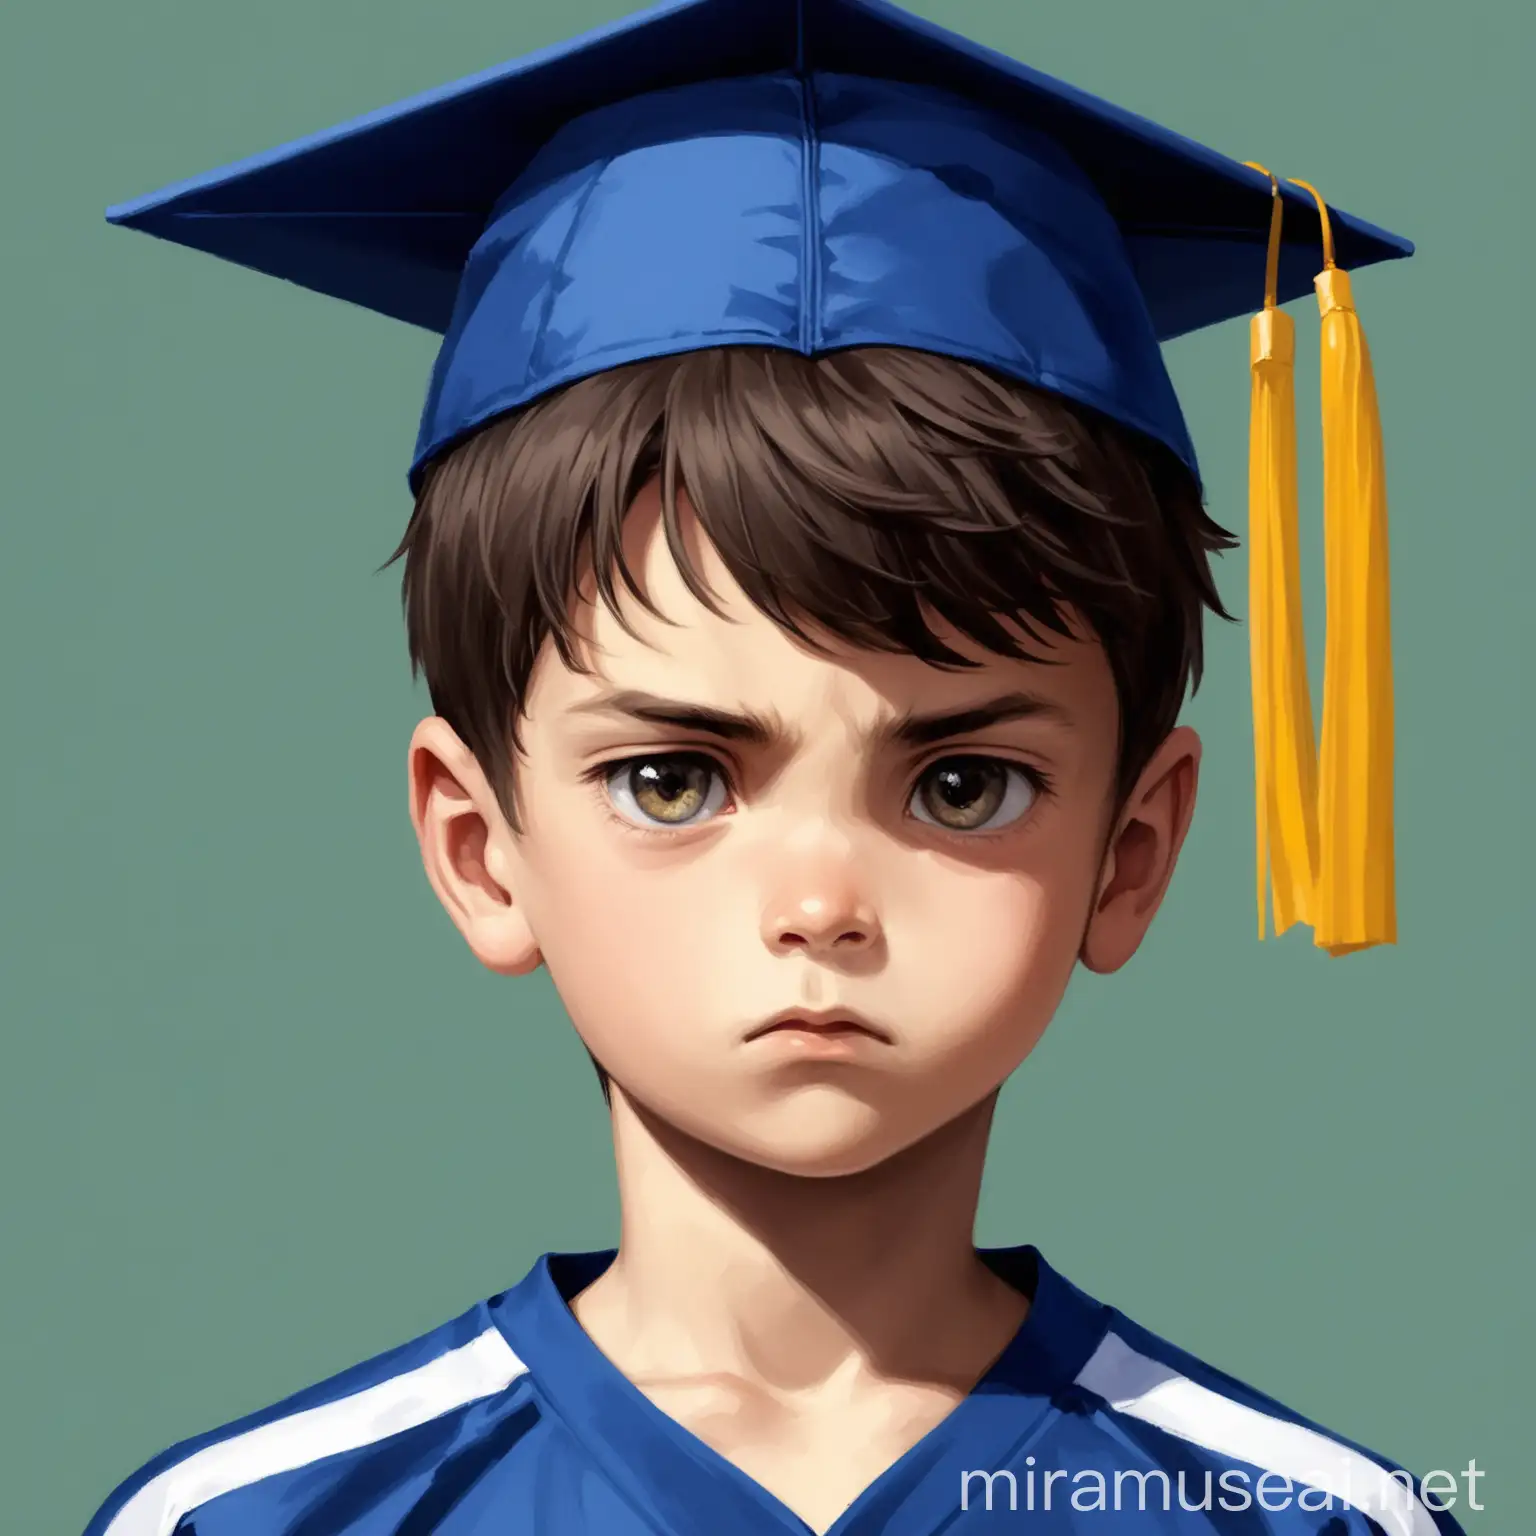 Left half: A young boy looking determined, perhaps wearing a graduation cap or a sports uniform.